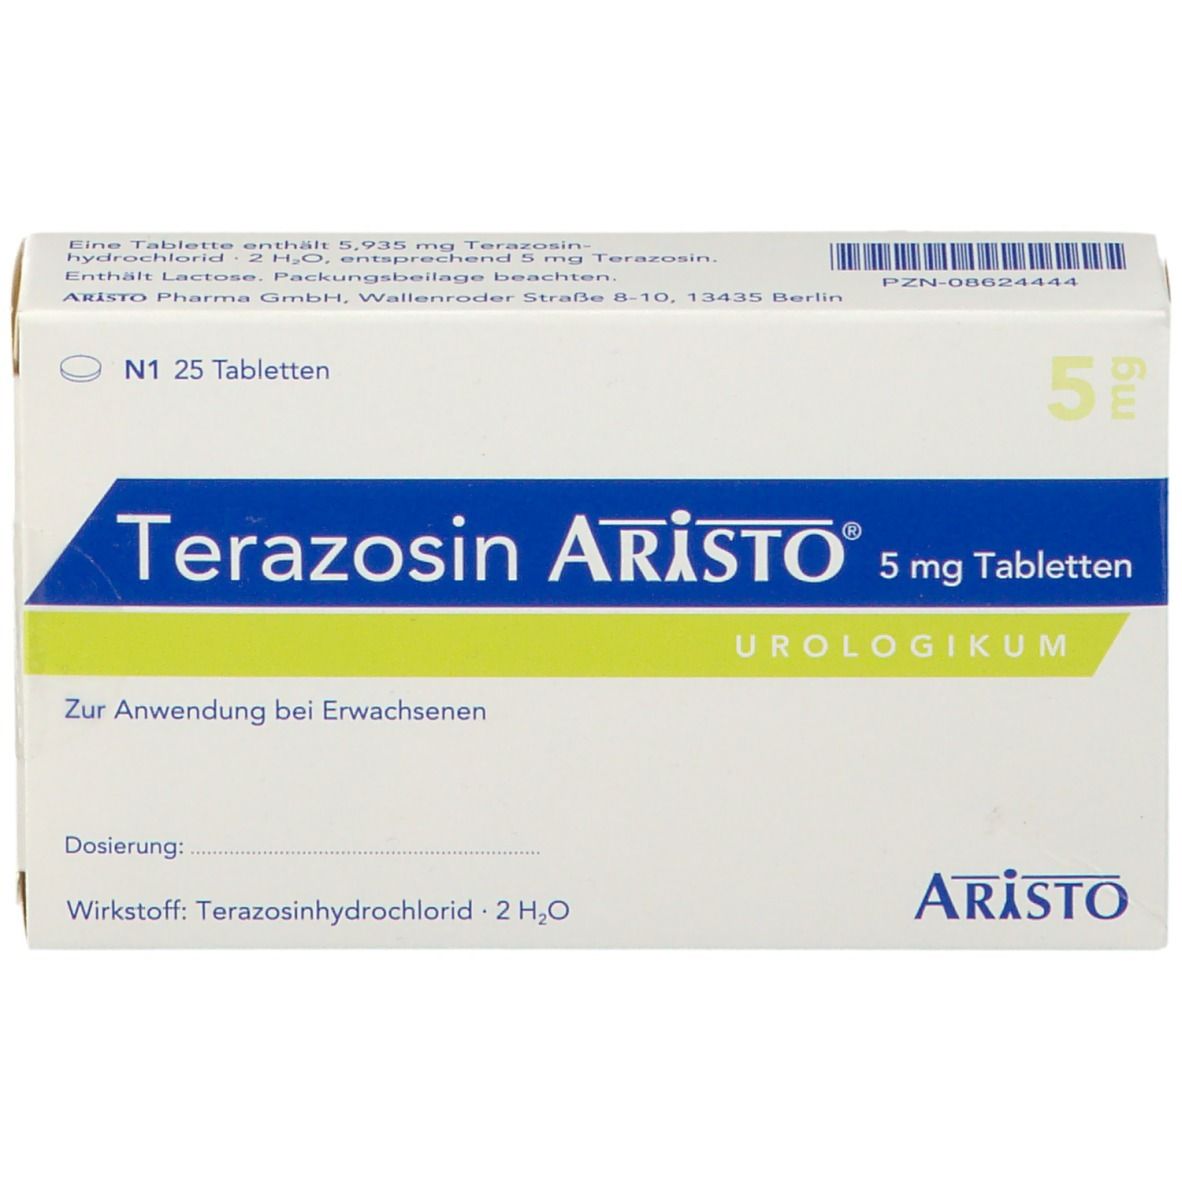 Terazosin Aristo® 5 mg